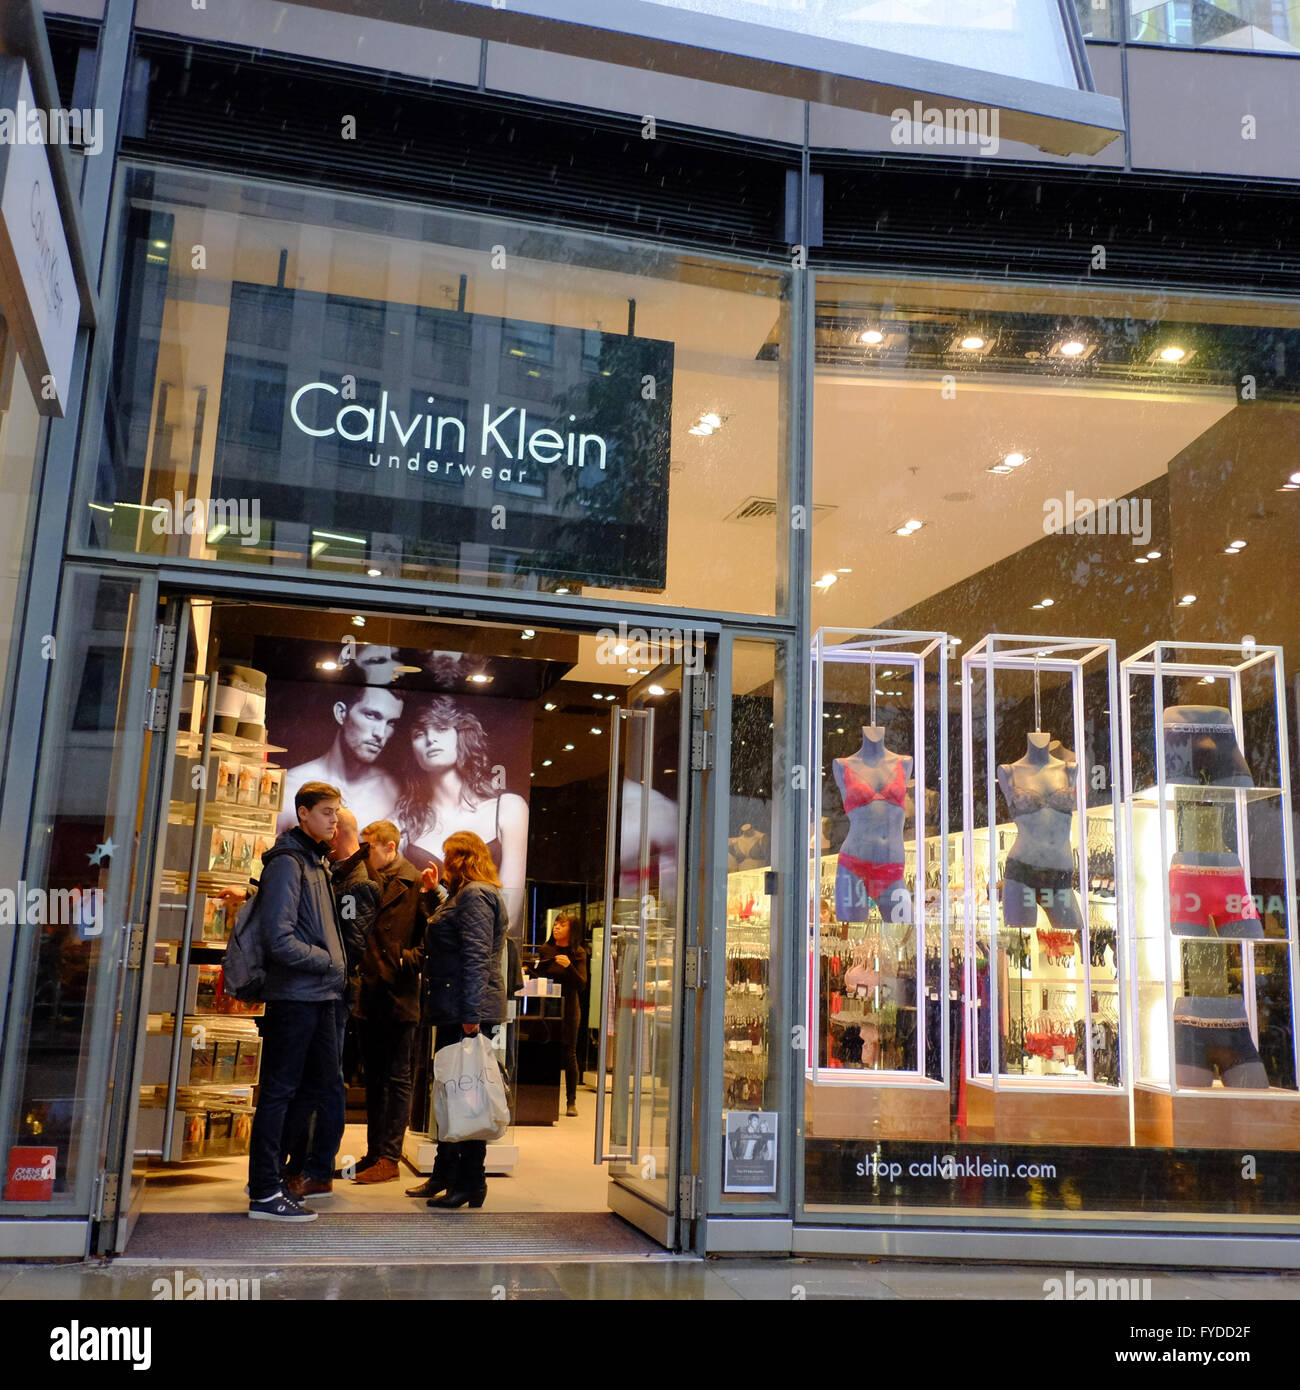 Calvin Klein underwear store in London with people doorway Stock Photo - Alamy